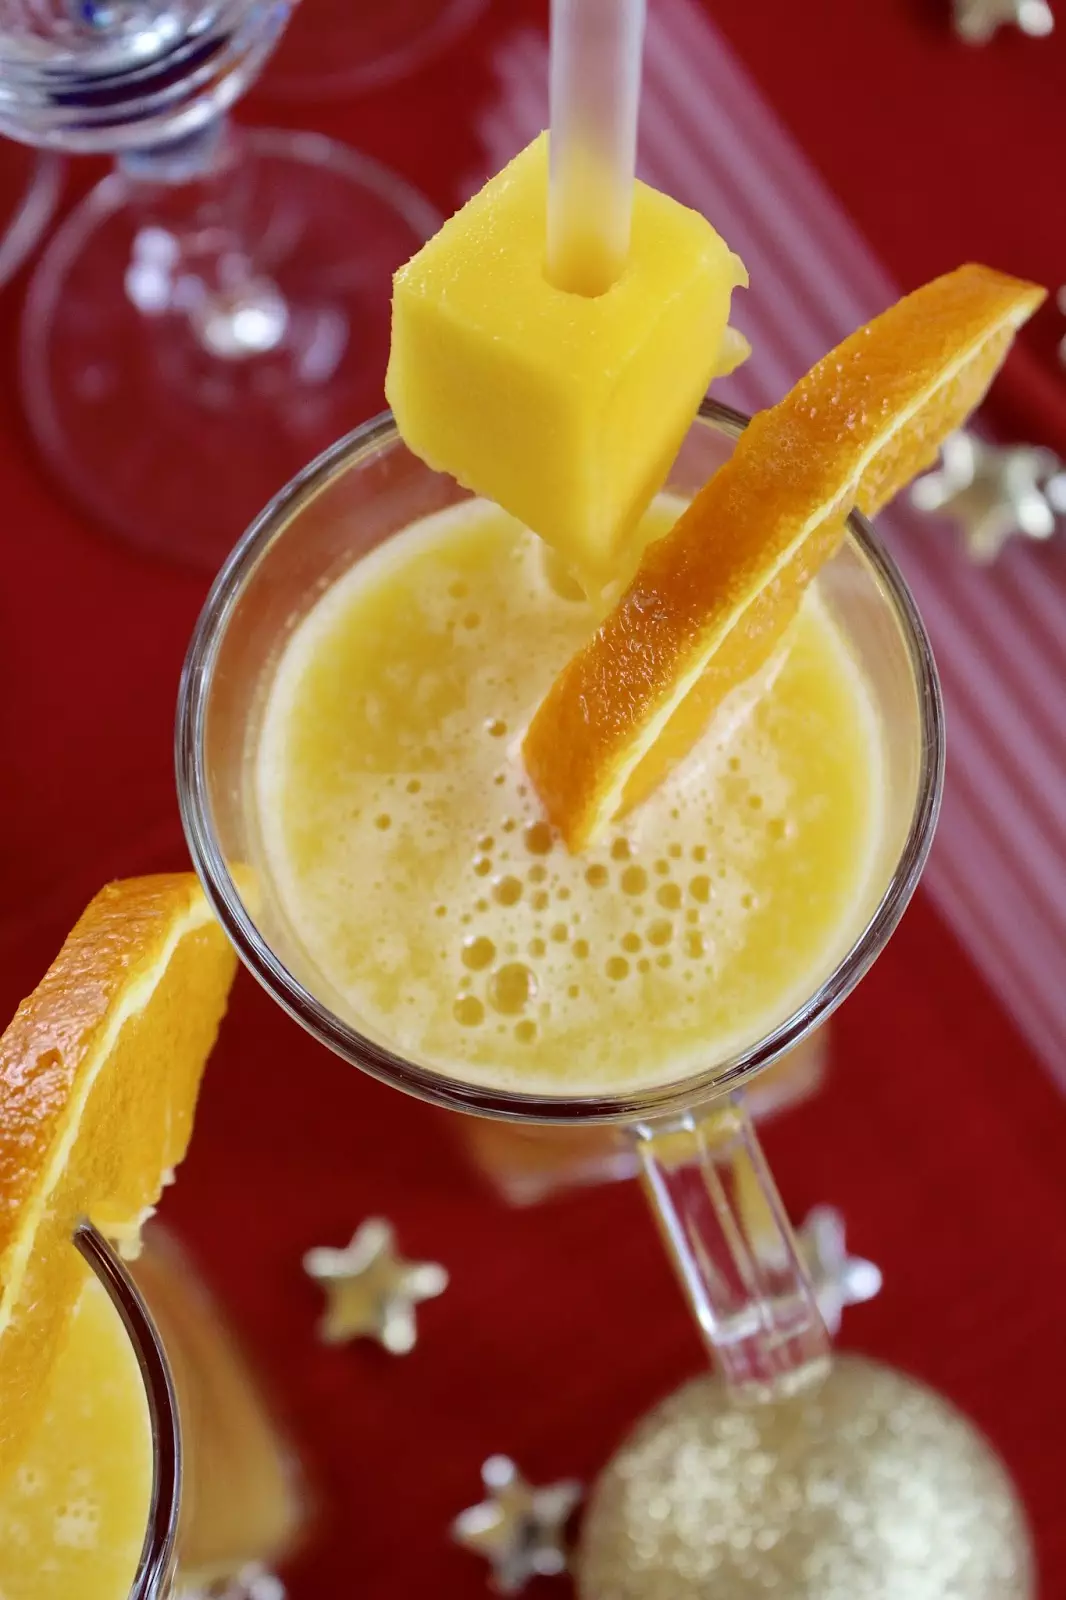 Mango-Maracuja-Smoothie von Sugarprincess